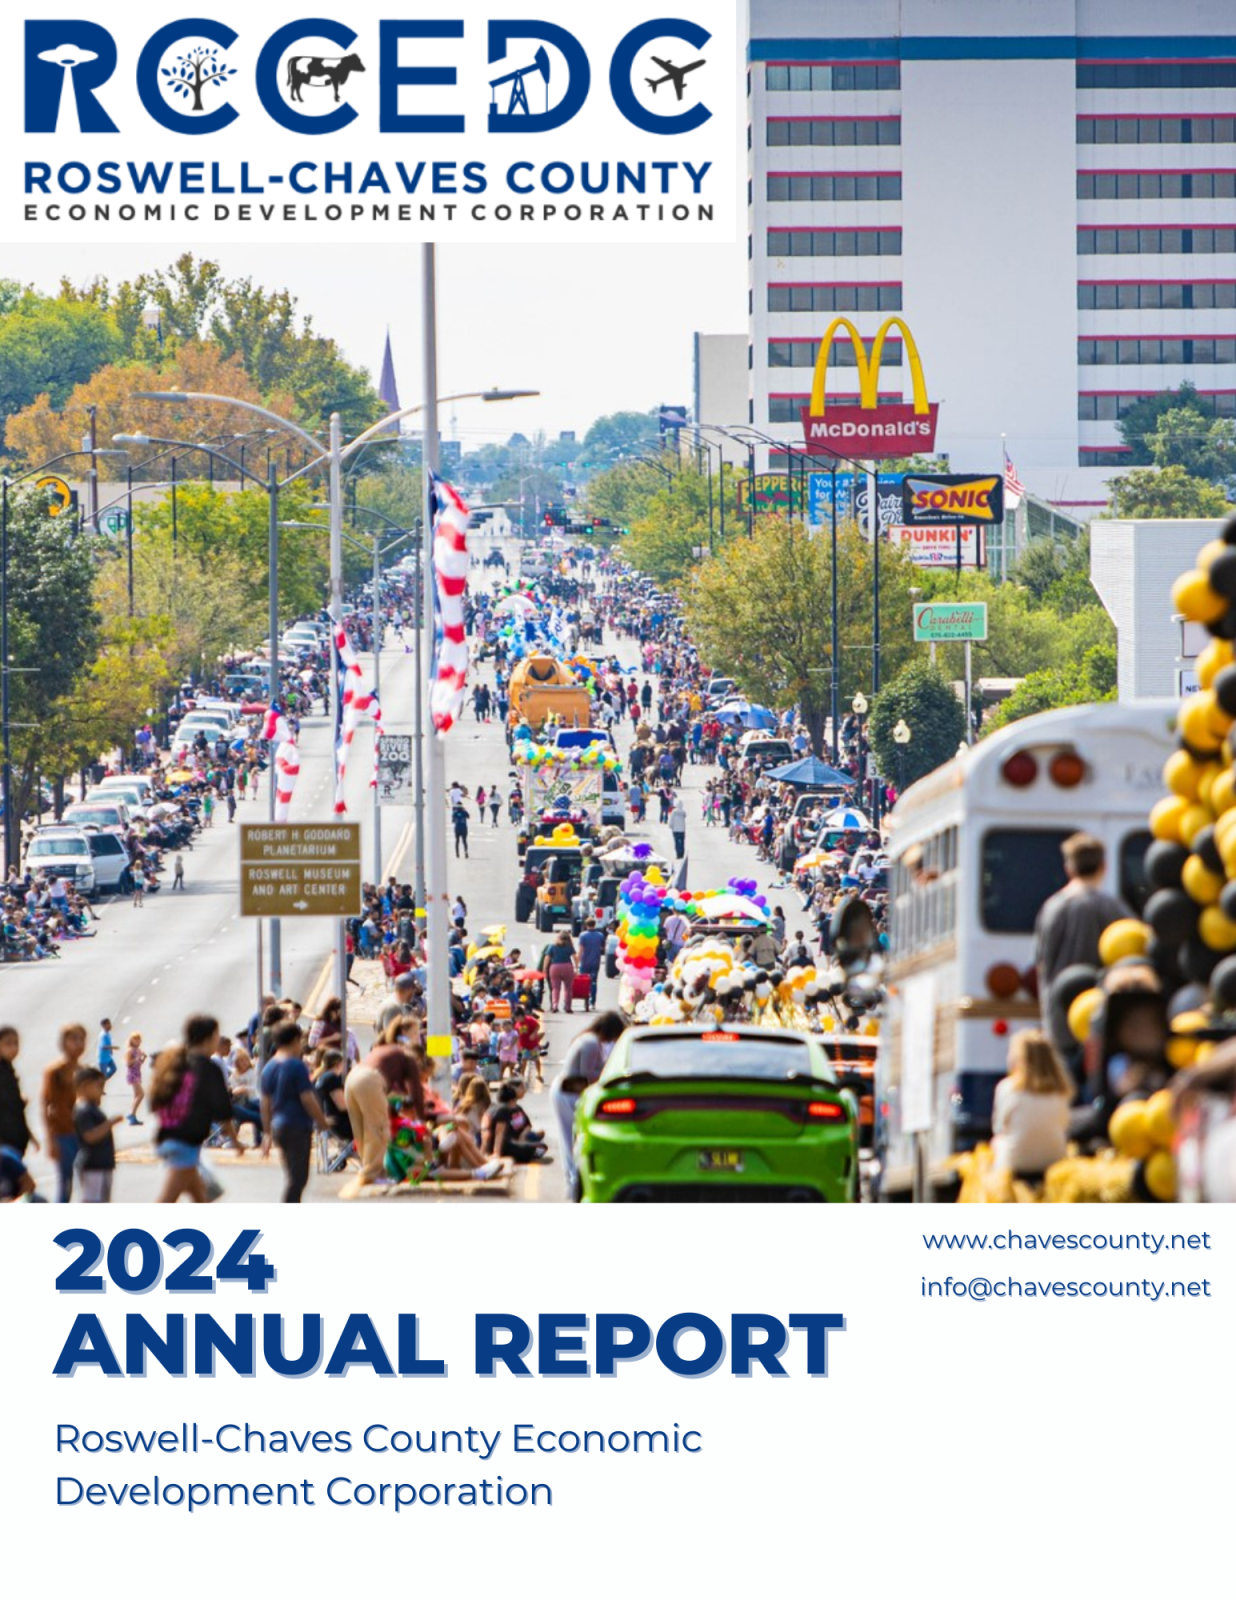 rccedc annual report